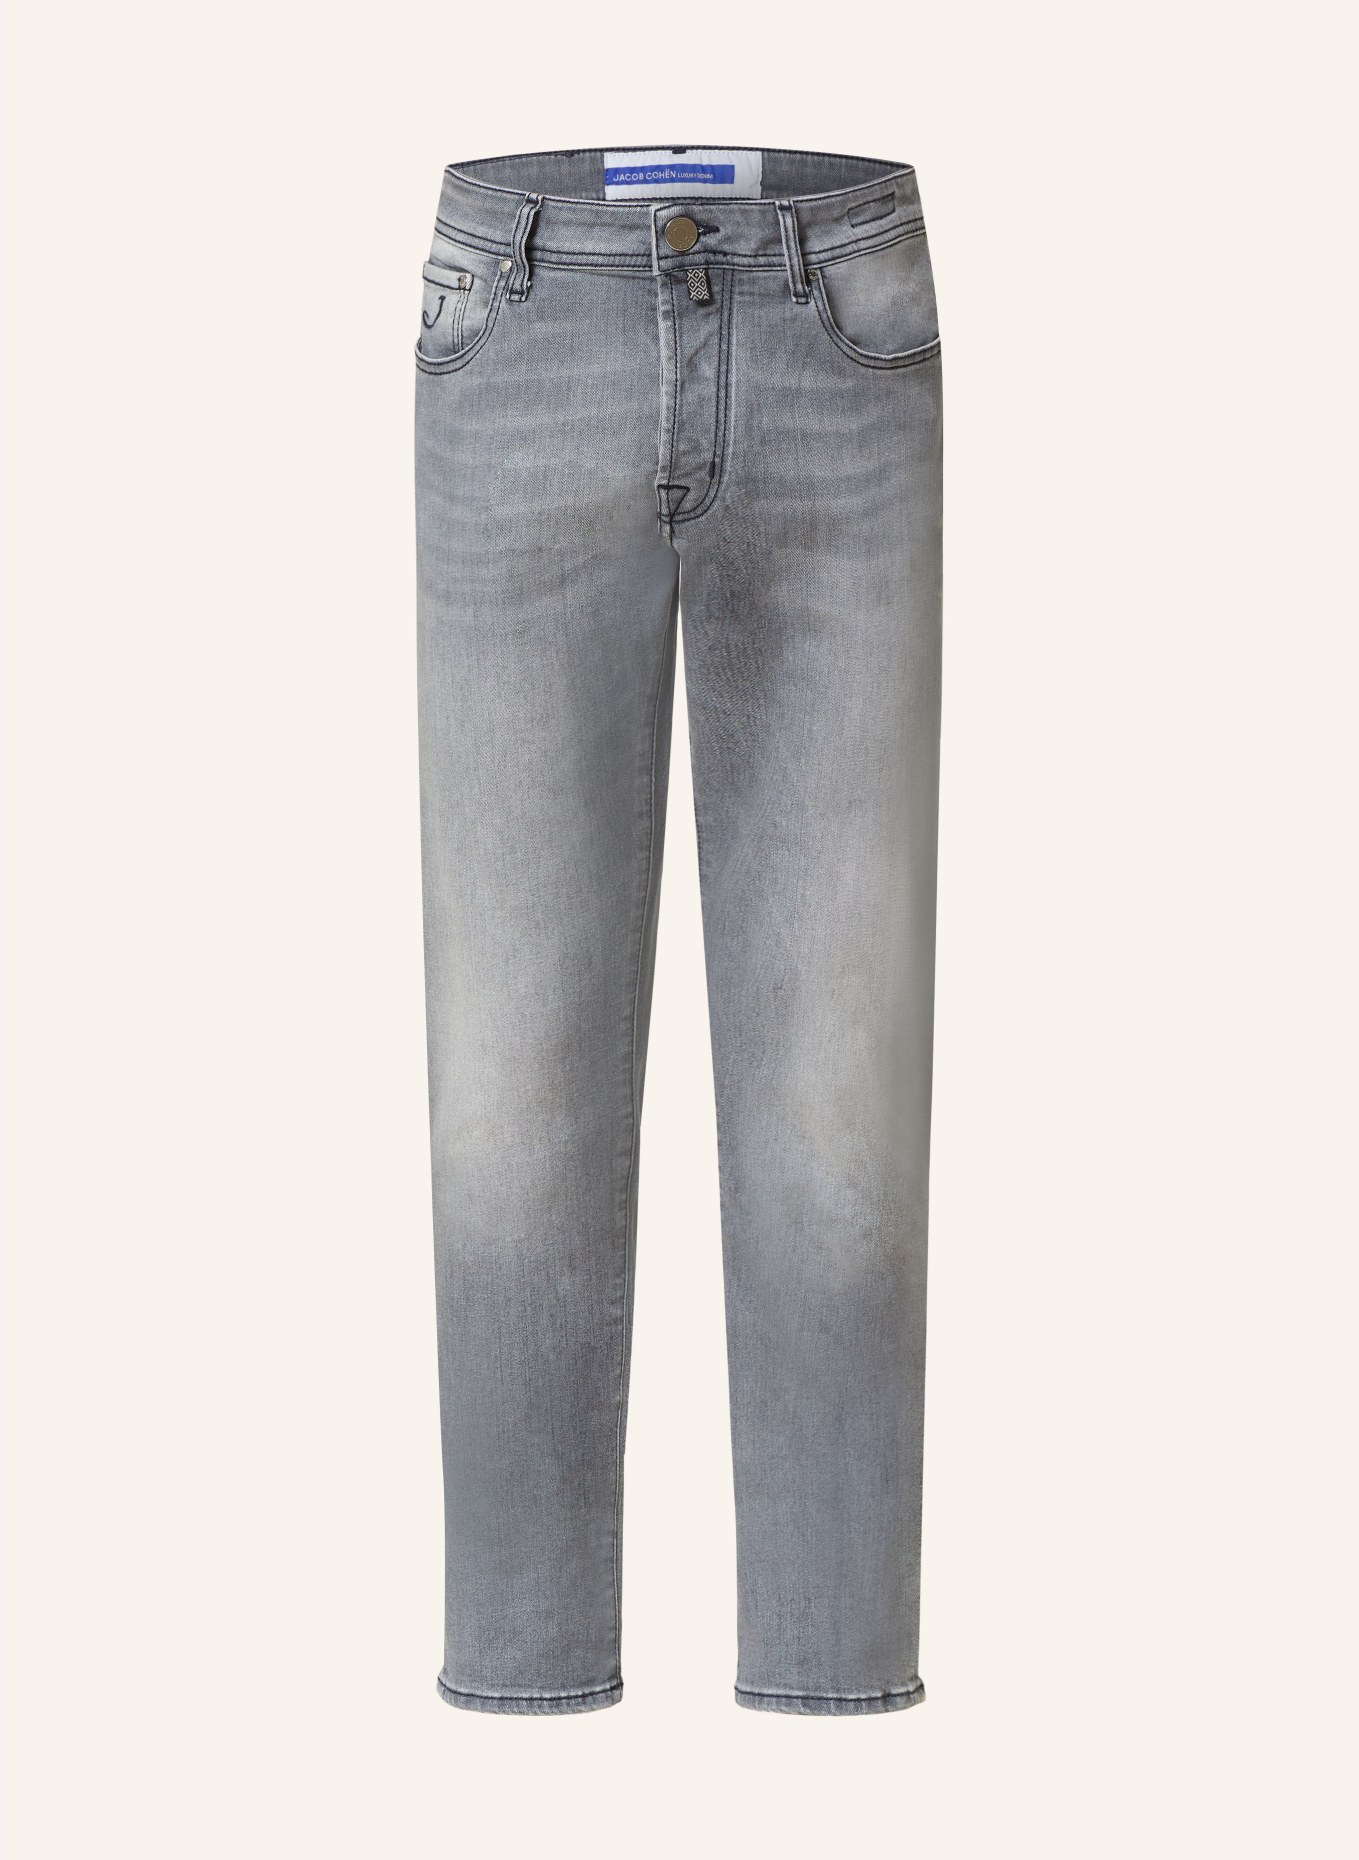 JACOB COHEN Jeans BARD Slim Fit, Farbe: 746D Light Grey (Bild 1)